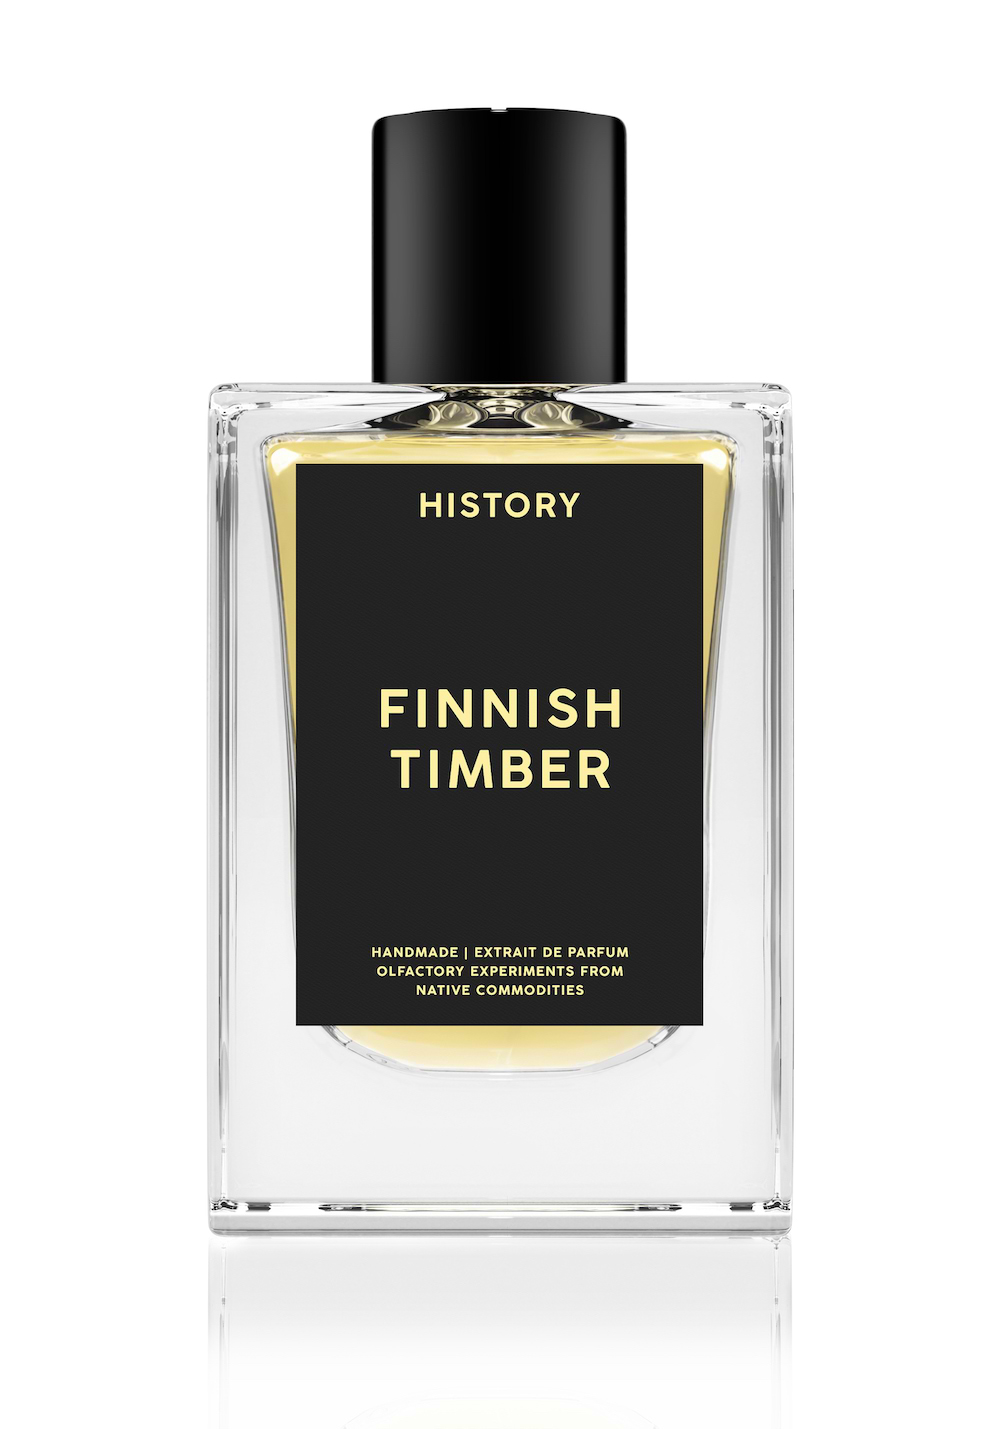 History Finnish Timber